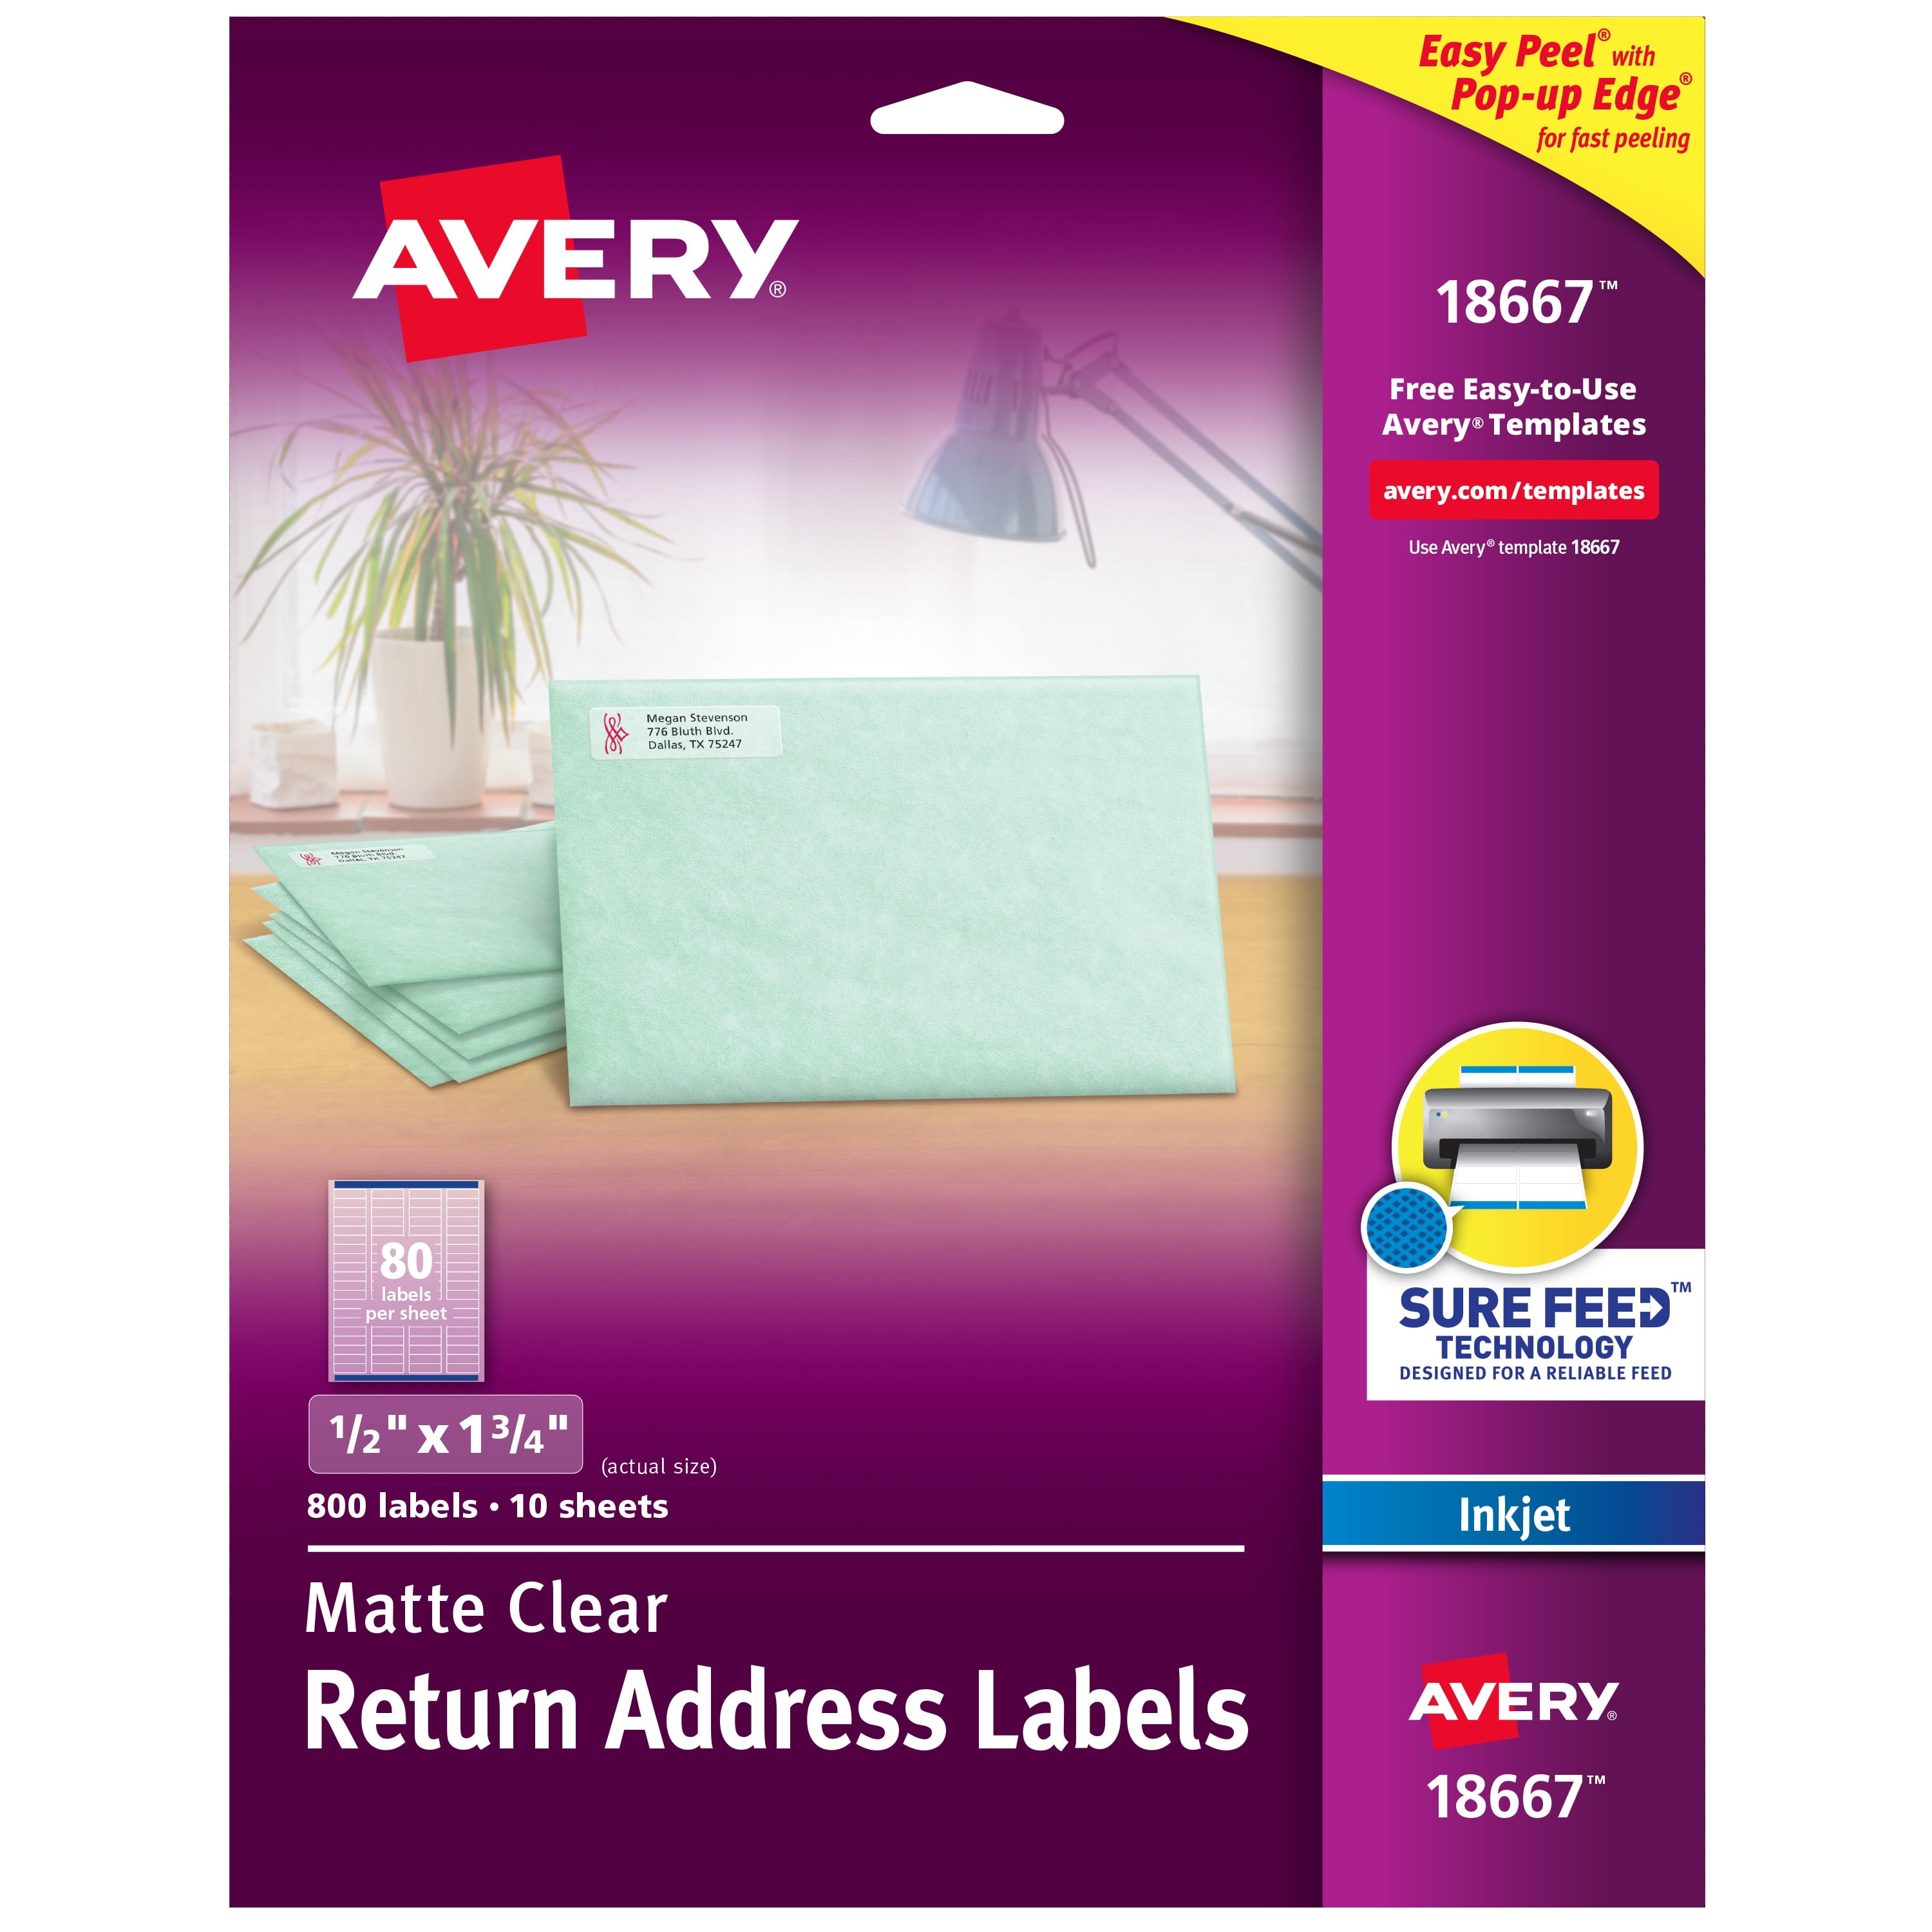 avery-matte-clear-return-address-labels-sure-feed-technology-inkjet-1-2-x-1-3-4-800-labels